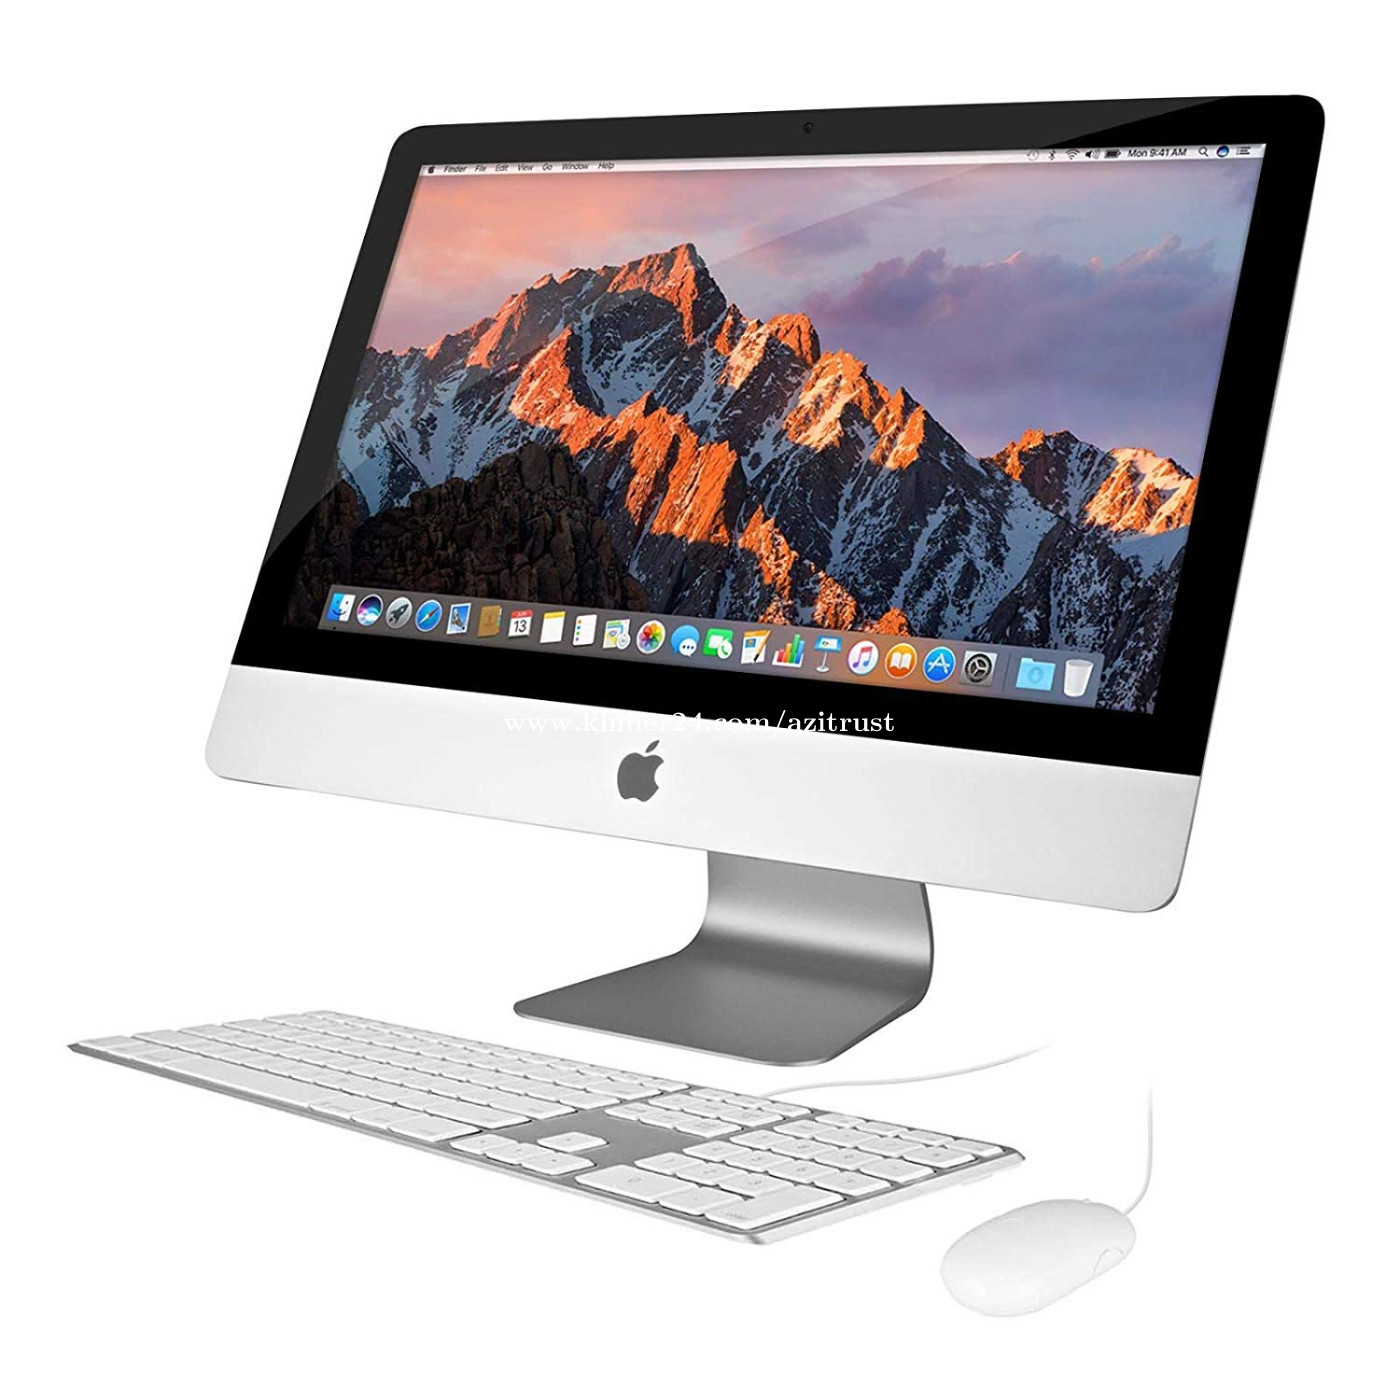 iMac（21.5-inch,Late 2013)